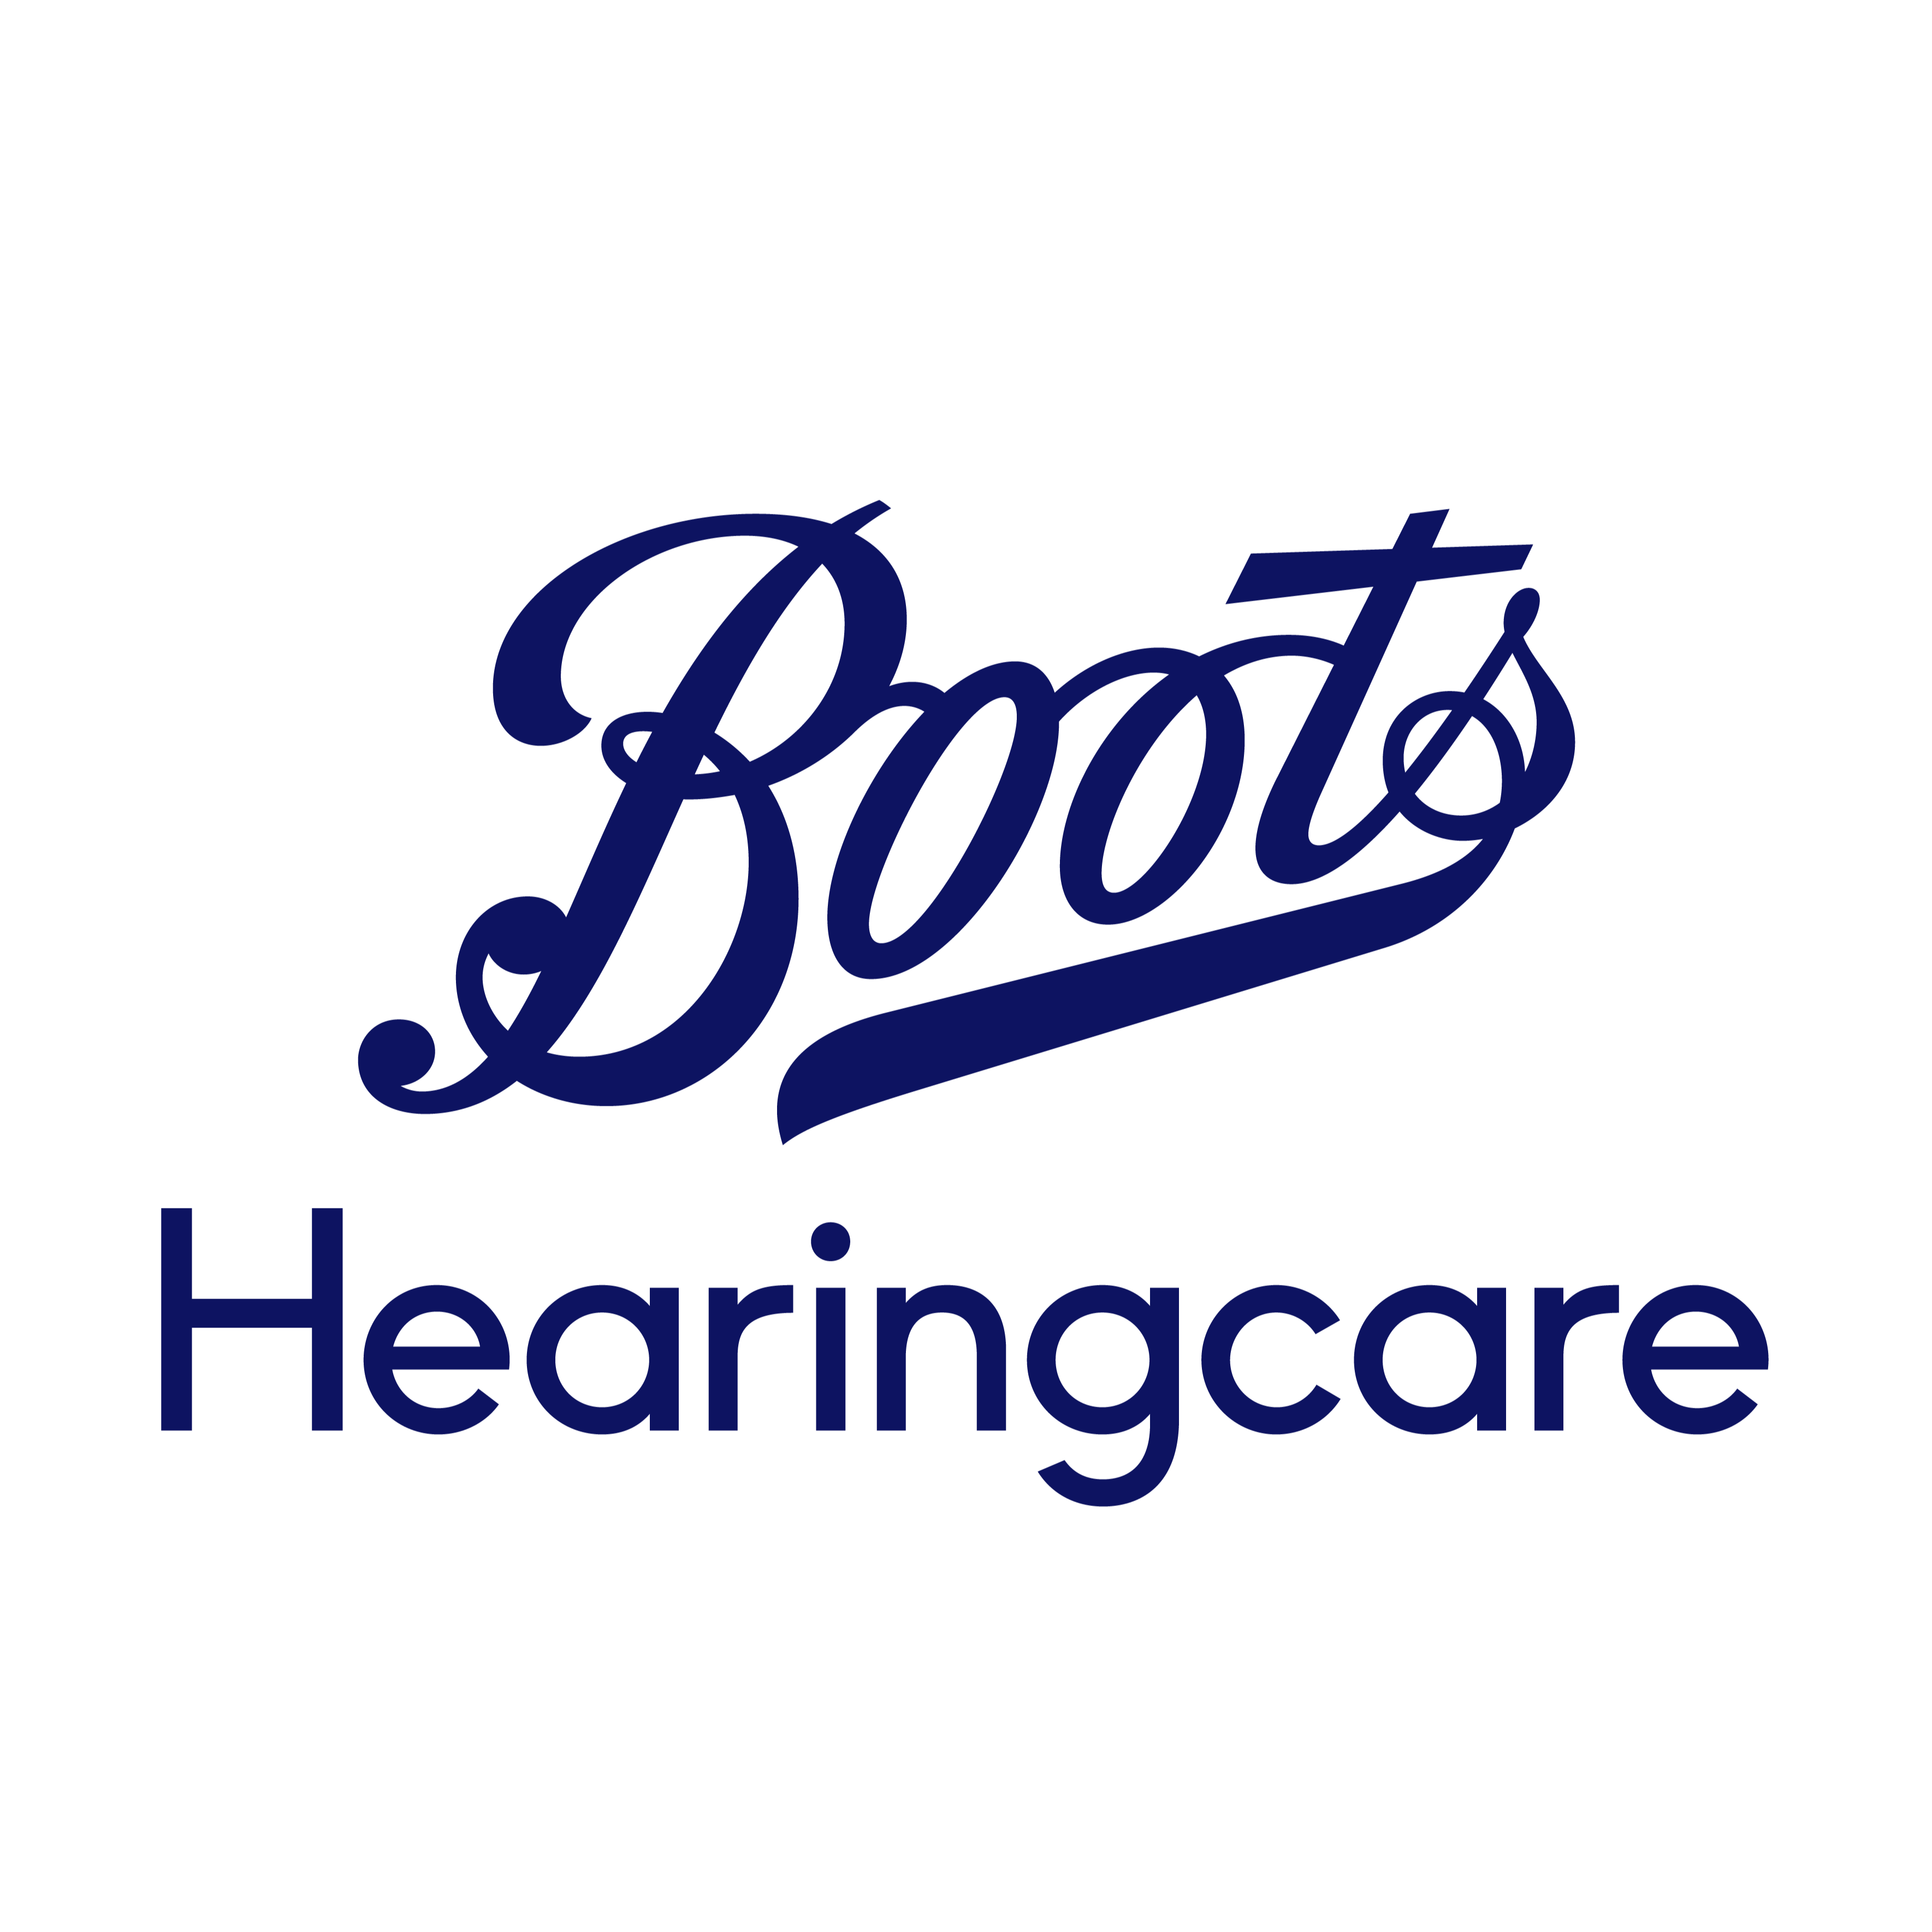 Boots Hearingcare Malvern - Malvern, Worcestershire WR14 1JQ - 03452 701600 | ShowMeLocal.com